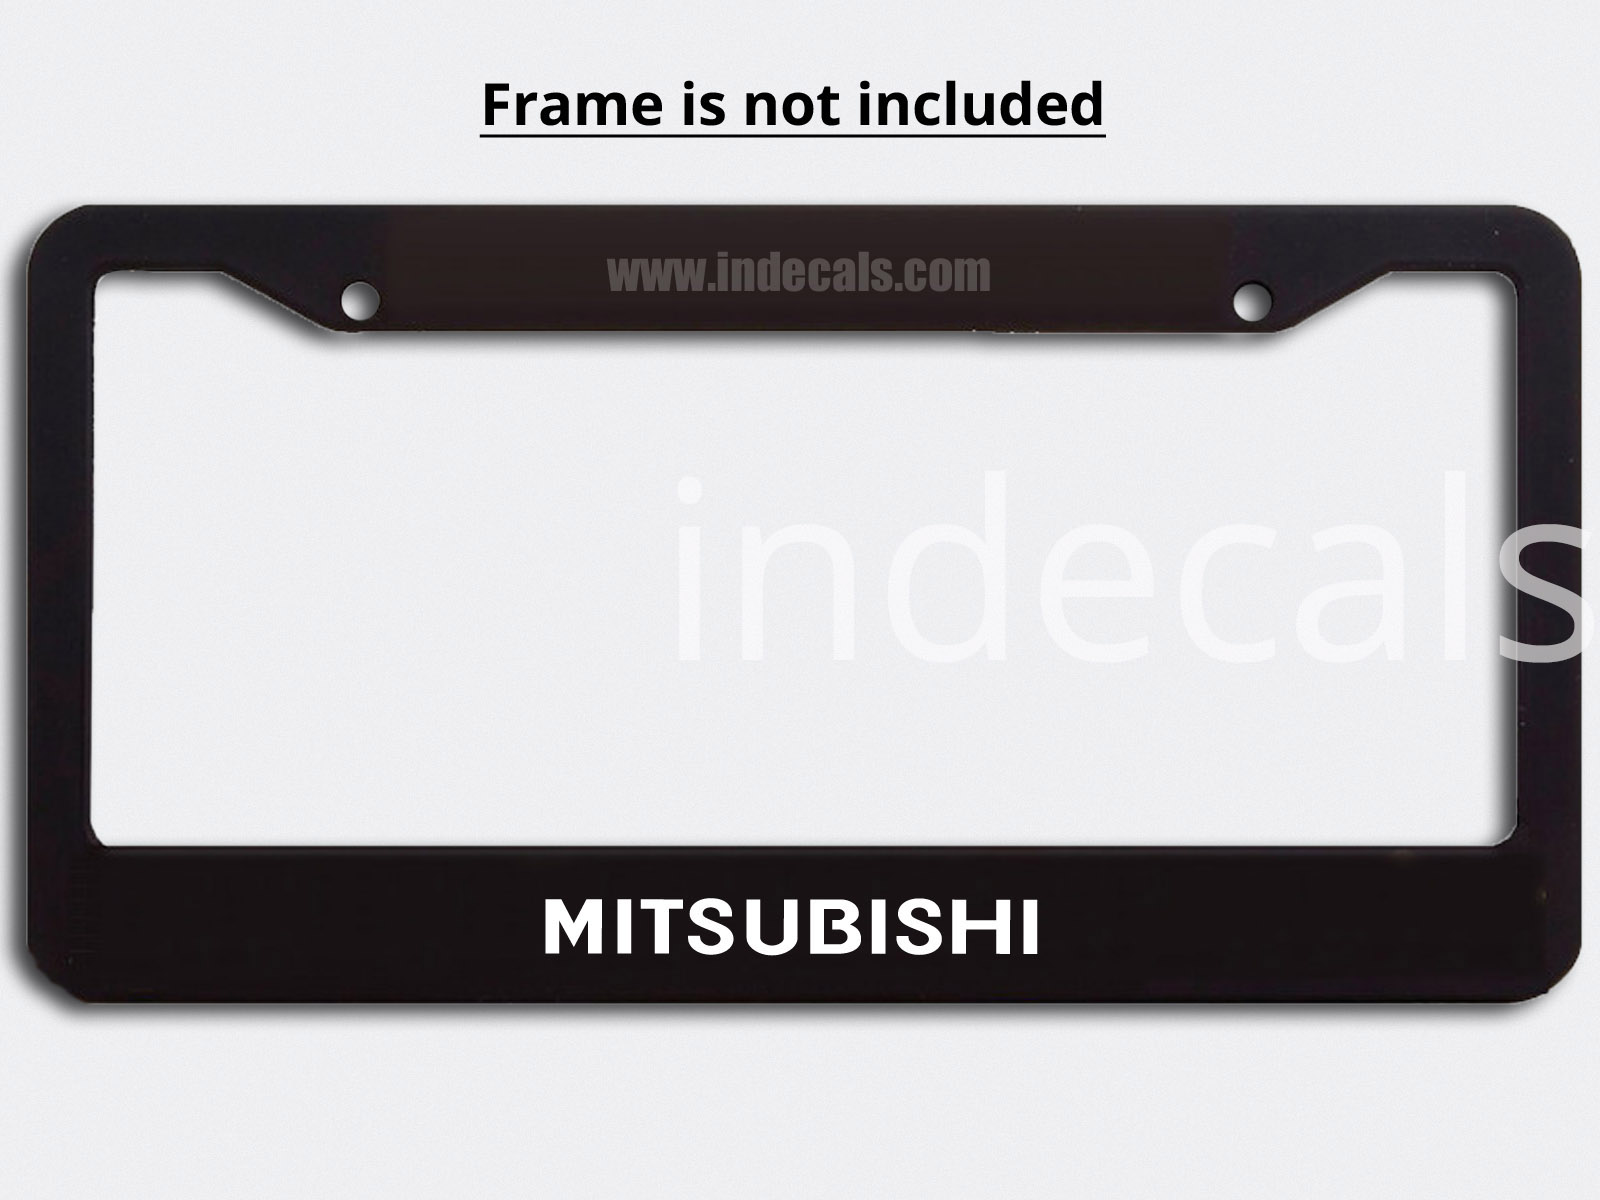 3 x Mitsubishi Stickers for Plate Frame - White